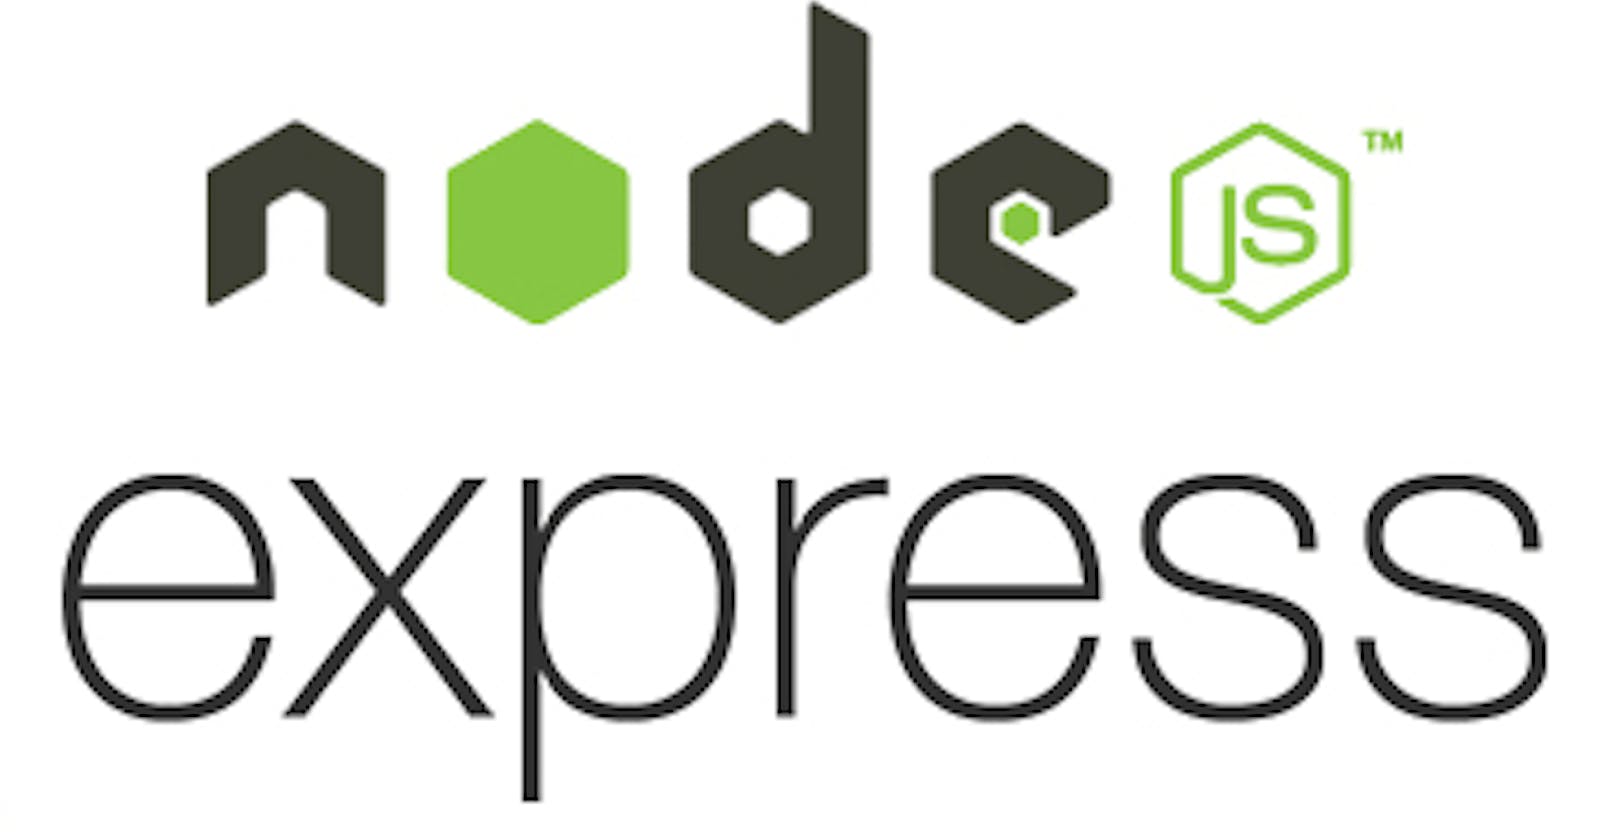 Create Express Server in Node.js